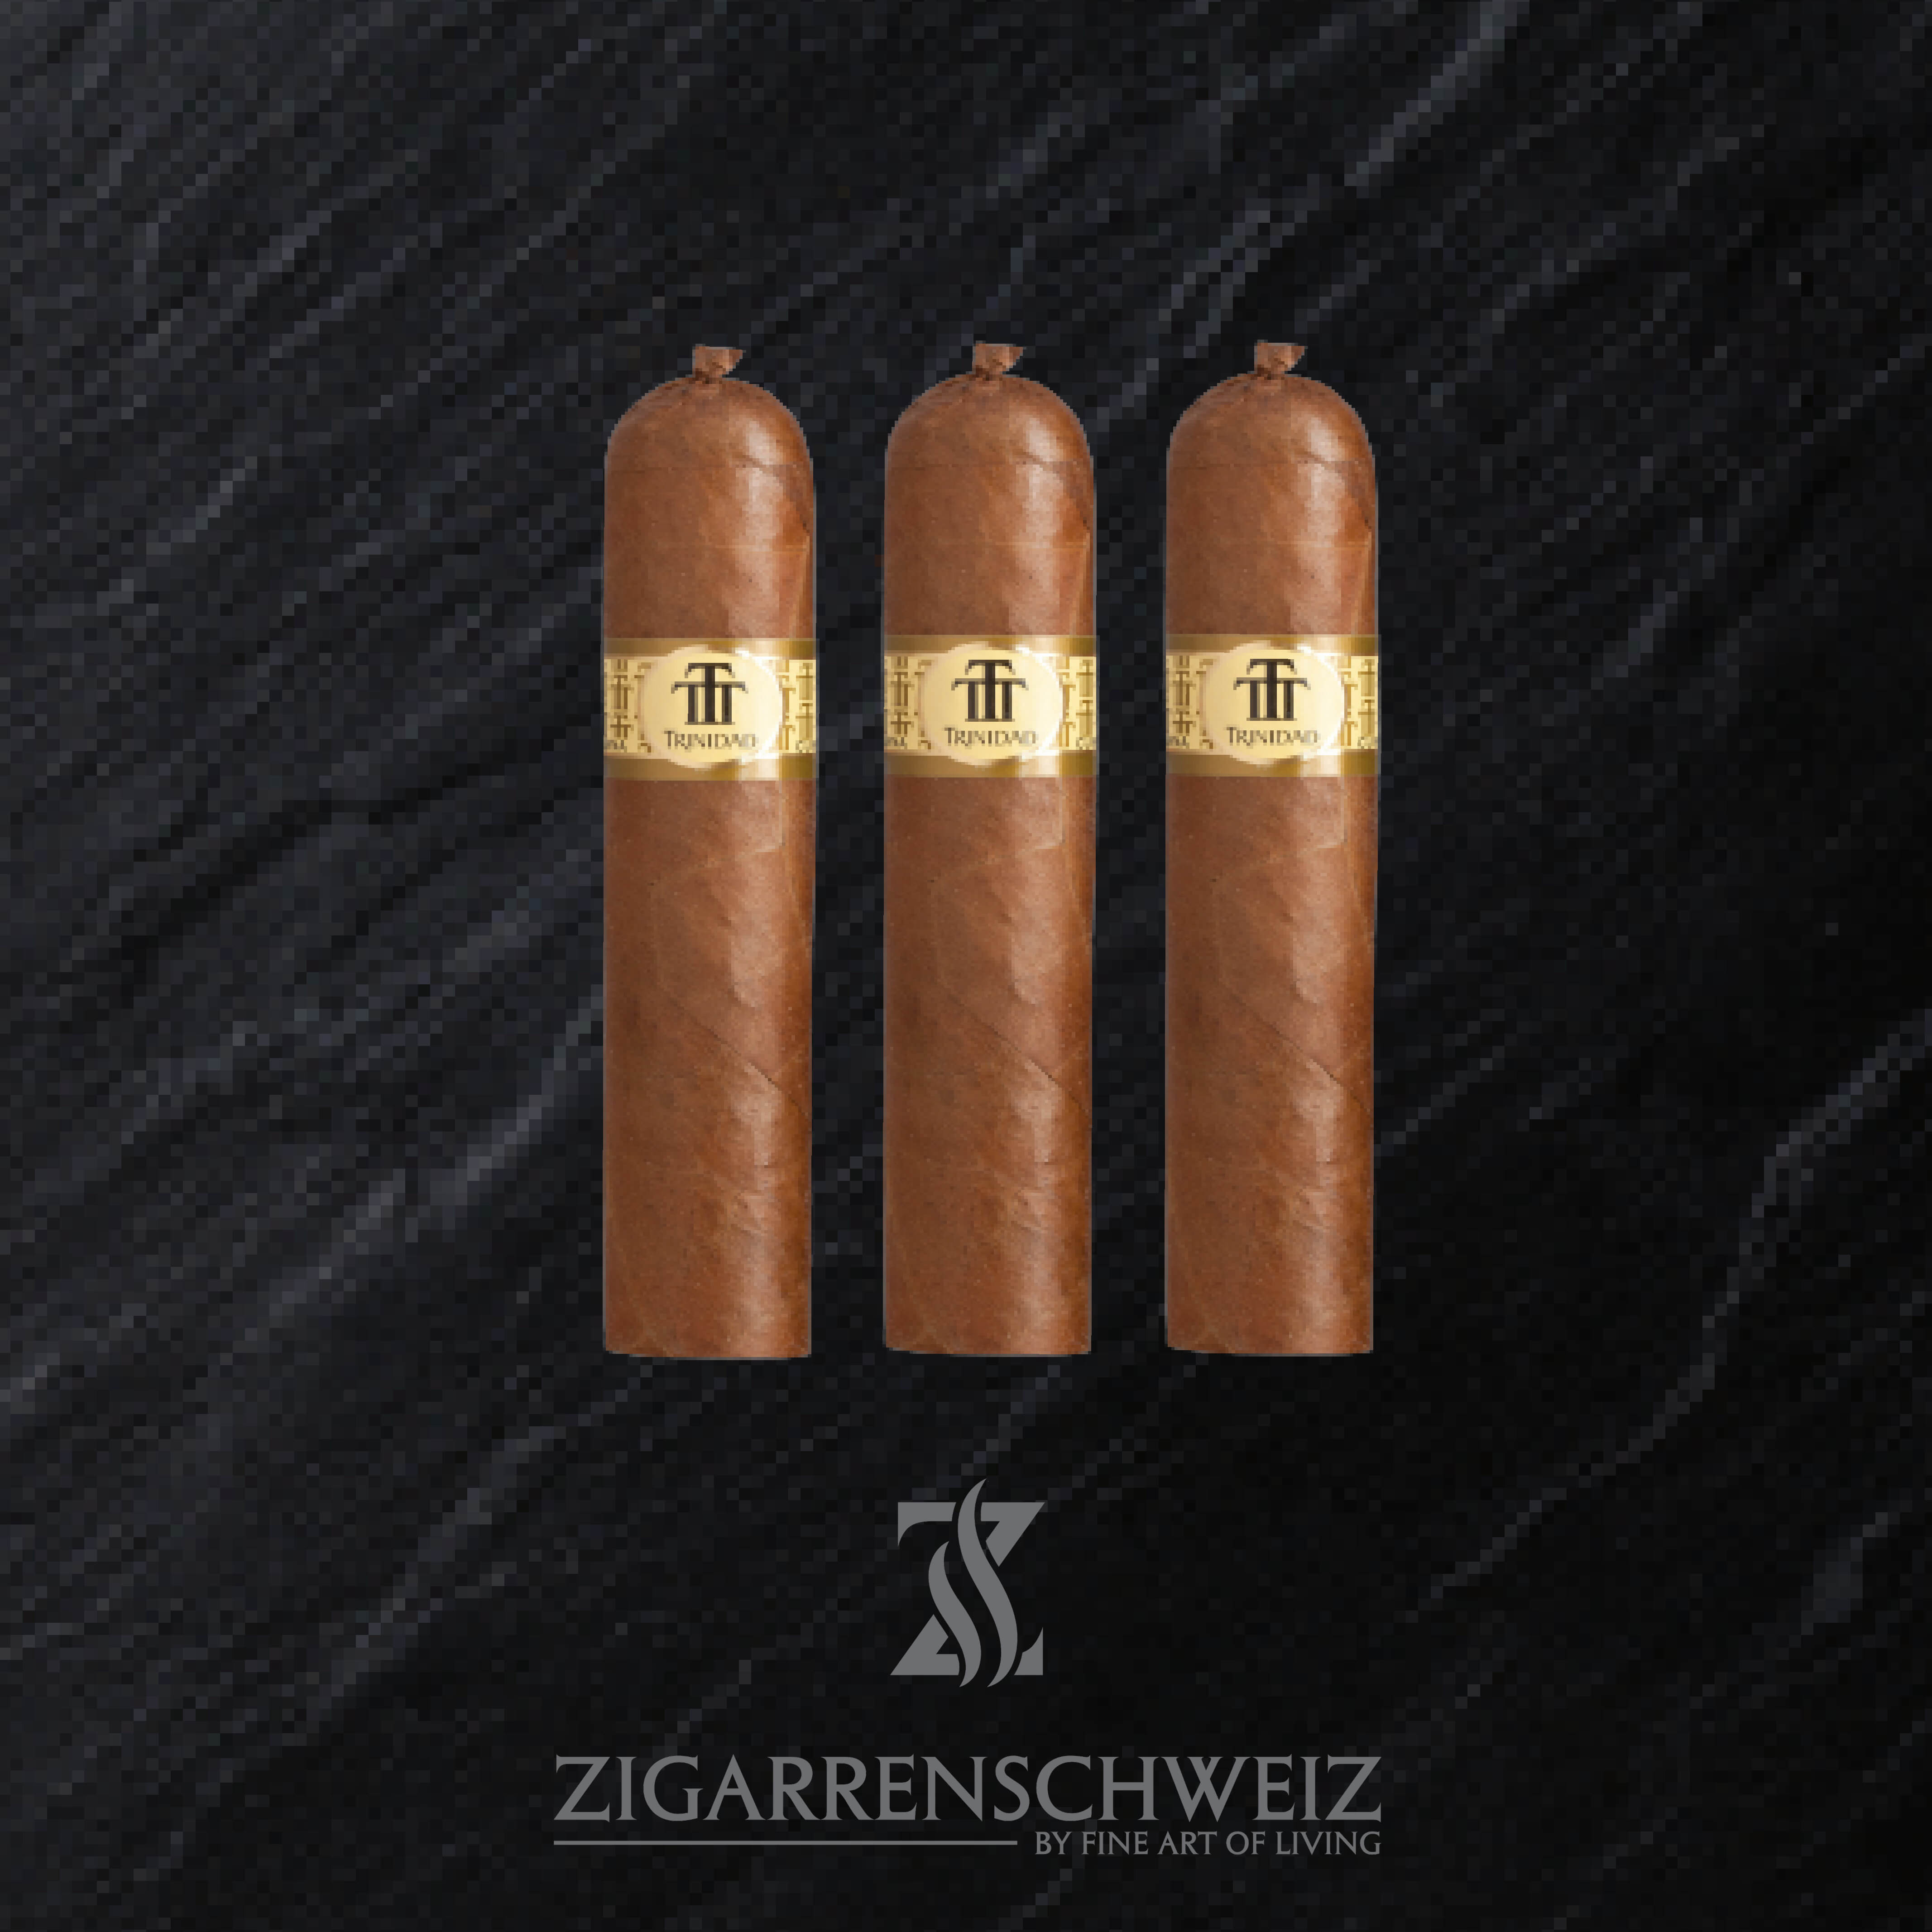 Trinidad Vigia Zigarren 3er Etui von Zigarren Schweiz